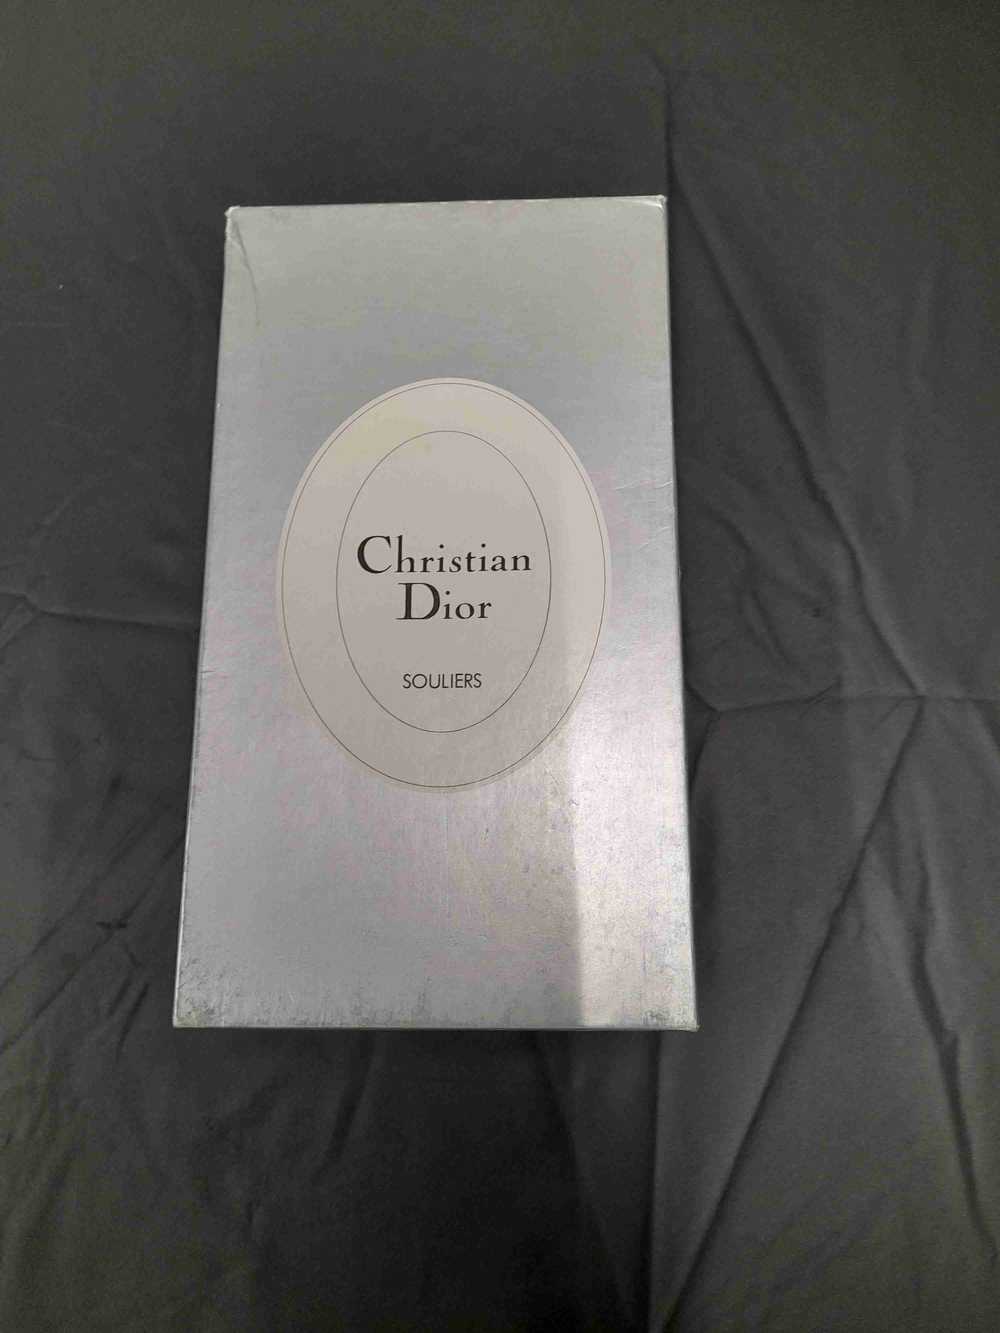 Christian Dior pumps - Christian Dior shoes - image 2